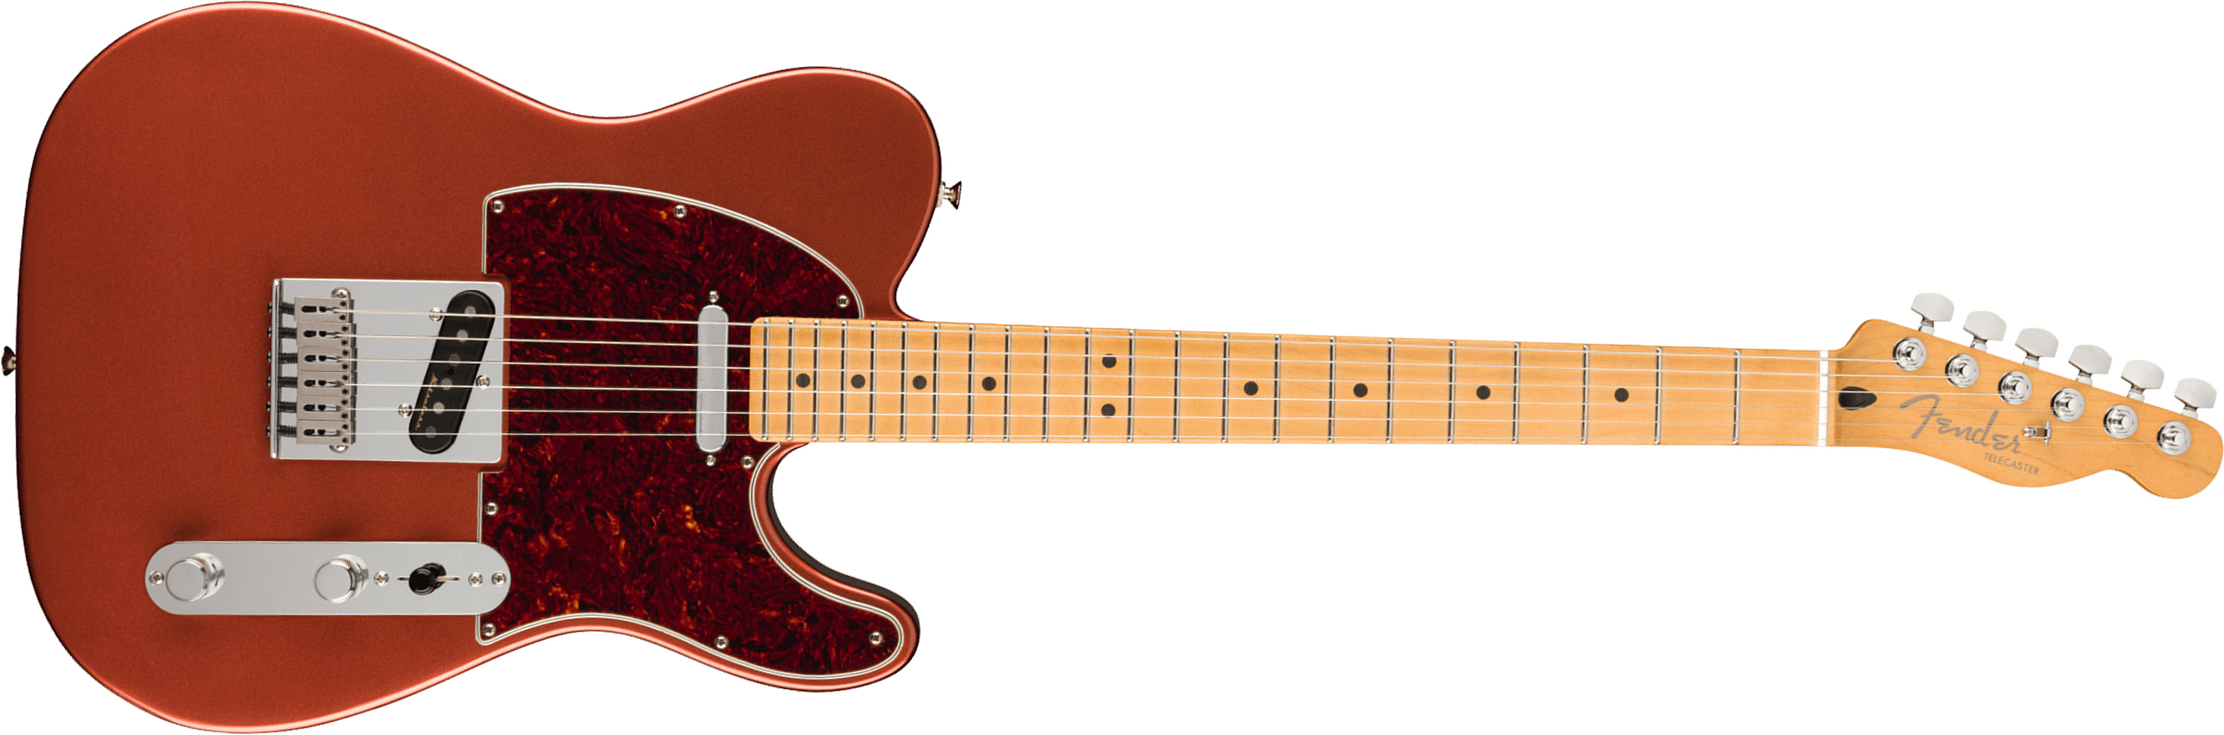 Fender Tele Player Plus Mex 2s Ht Mn - Aged Candy Apple Red - Televorm elektrische gitaar - Main picture